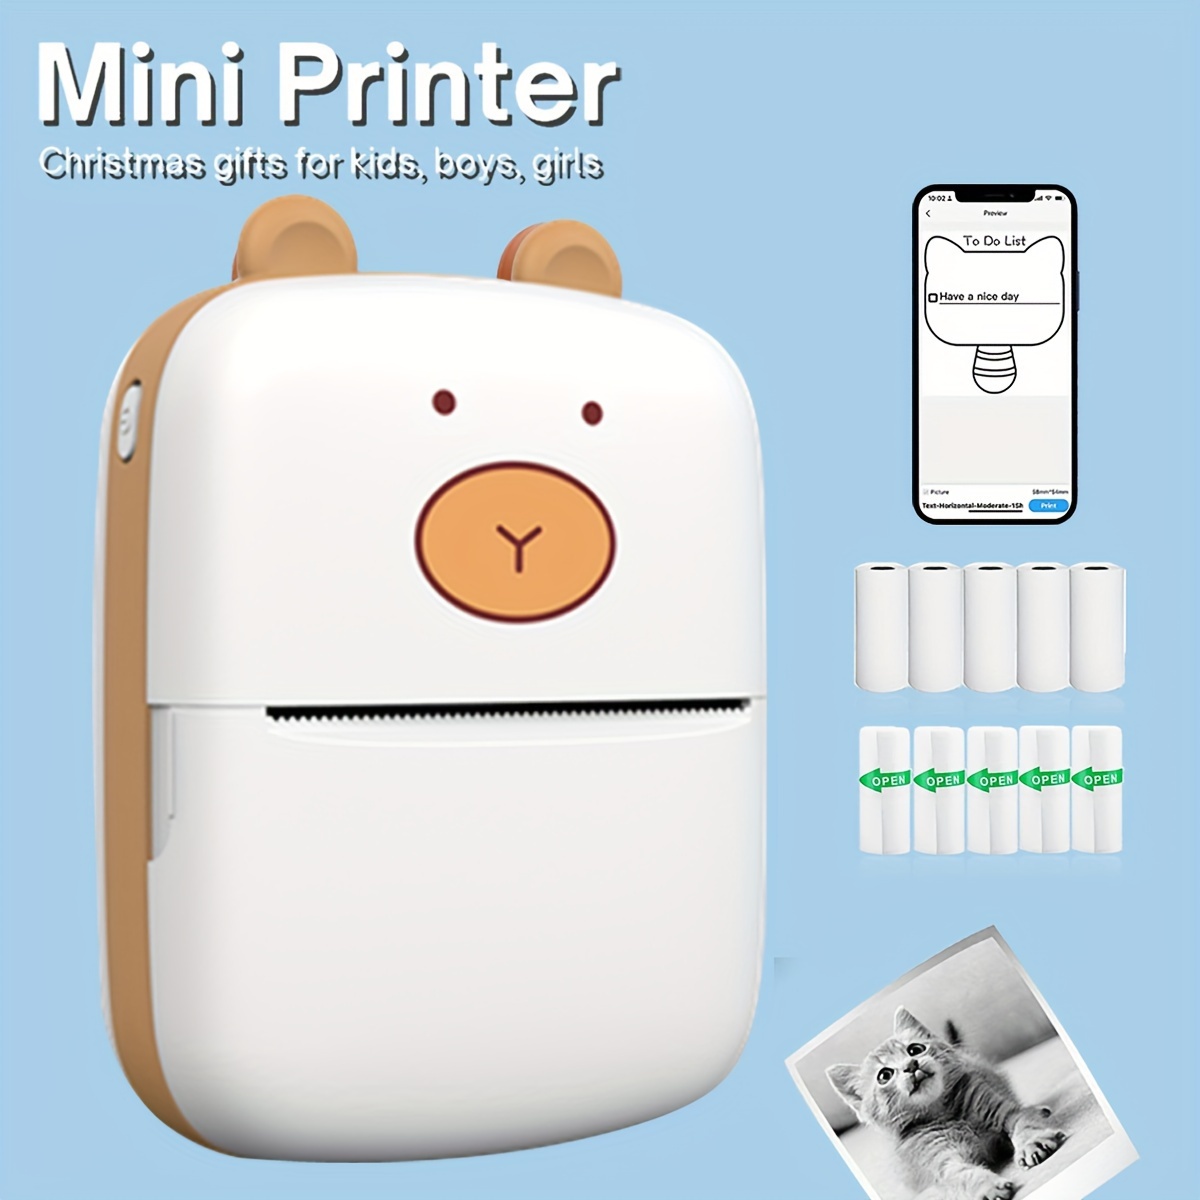 Mini impresora portátil, impresora adhesiva sin tinta con 12 rollos de  papel, mini impresora térmica para notas, fotos, etiquetas, recibos,  impresora